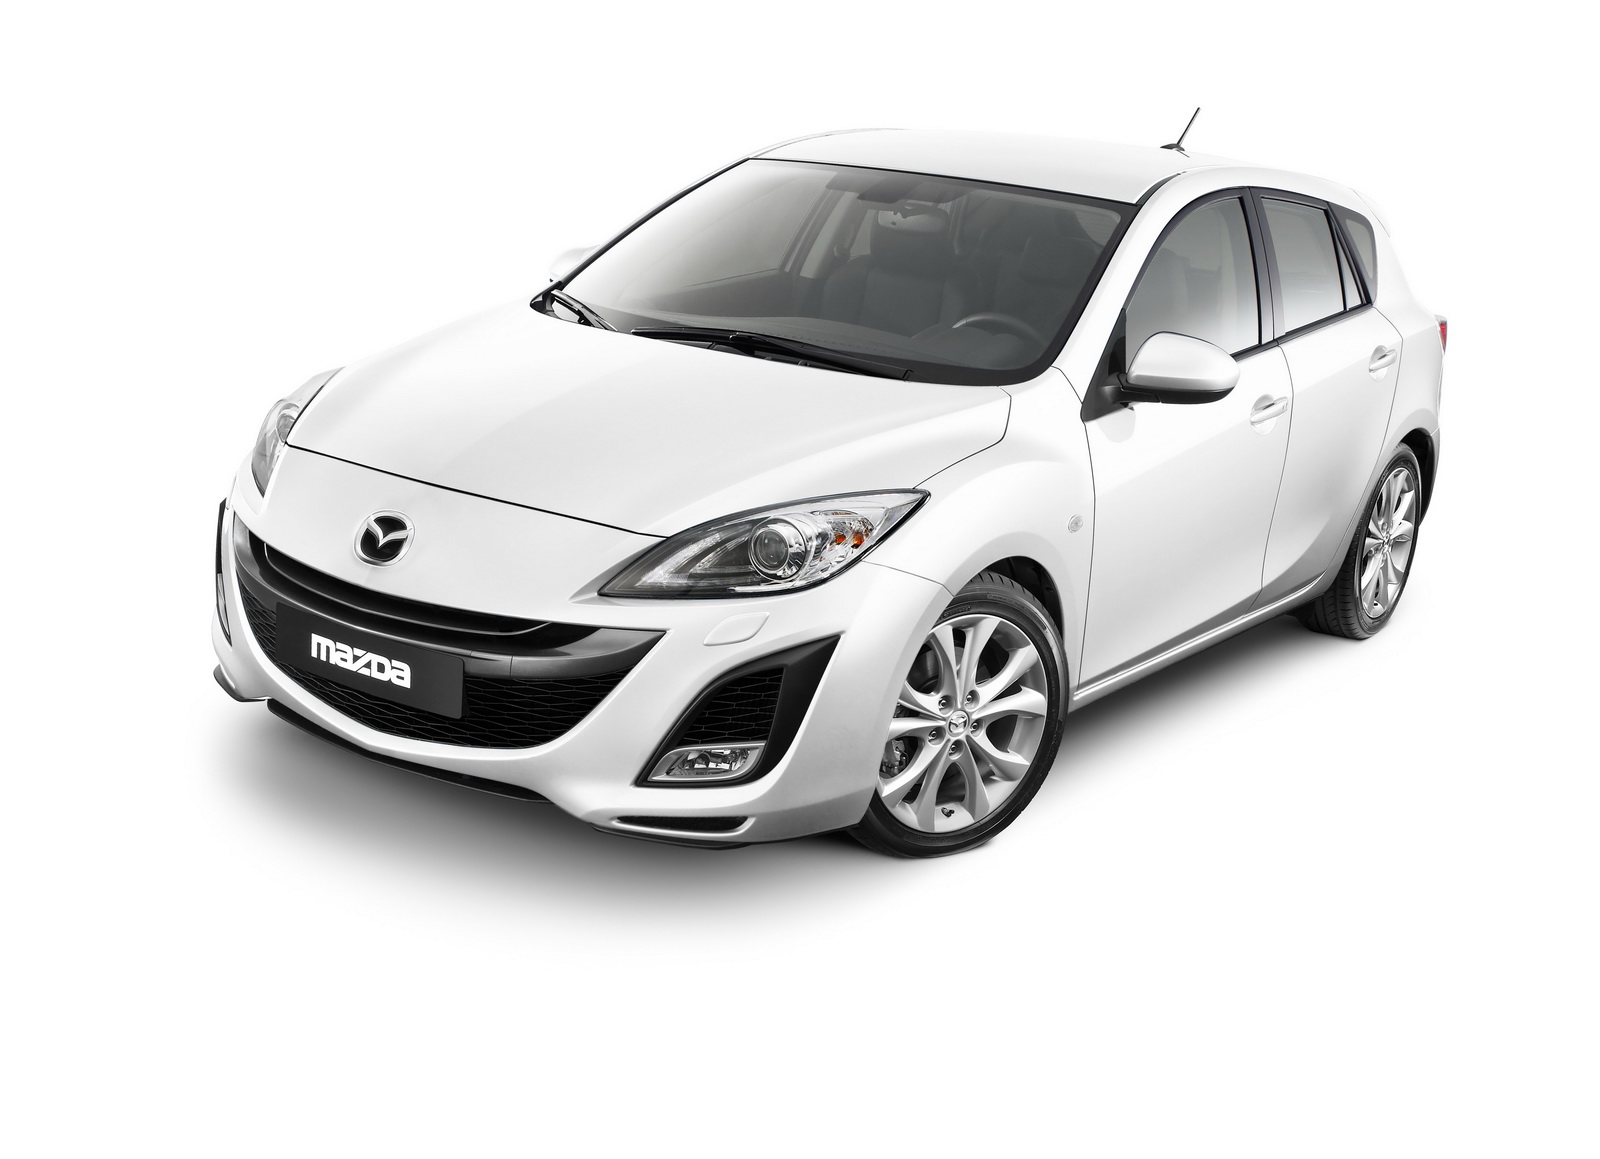 Mazda3 global production reaches three million units